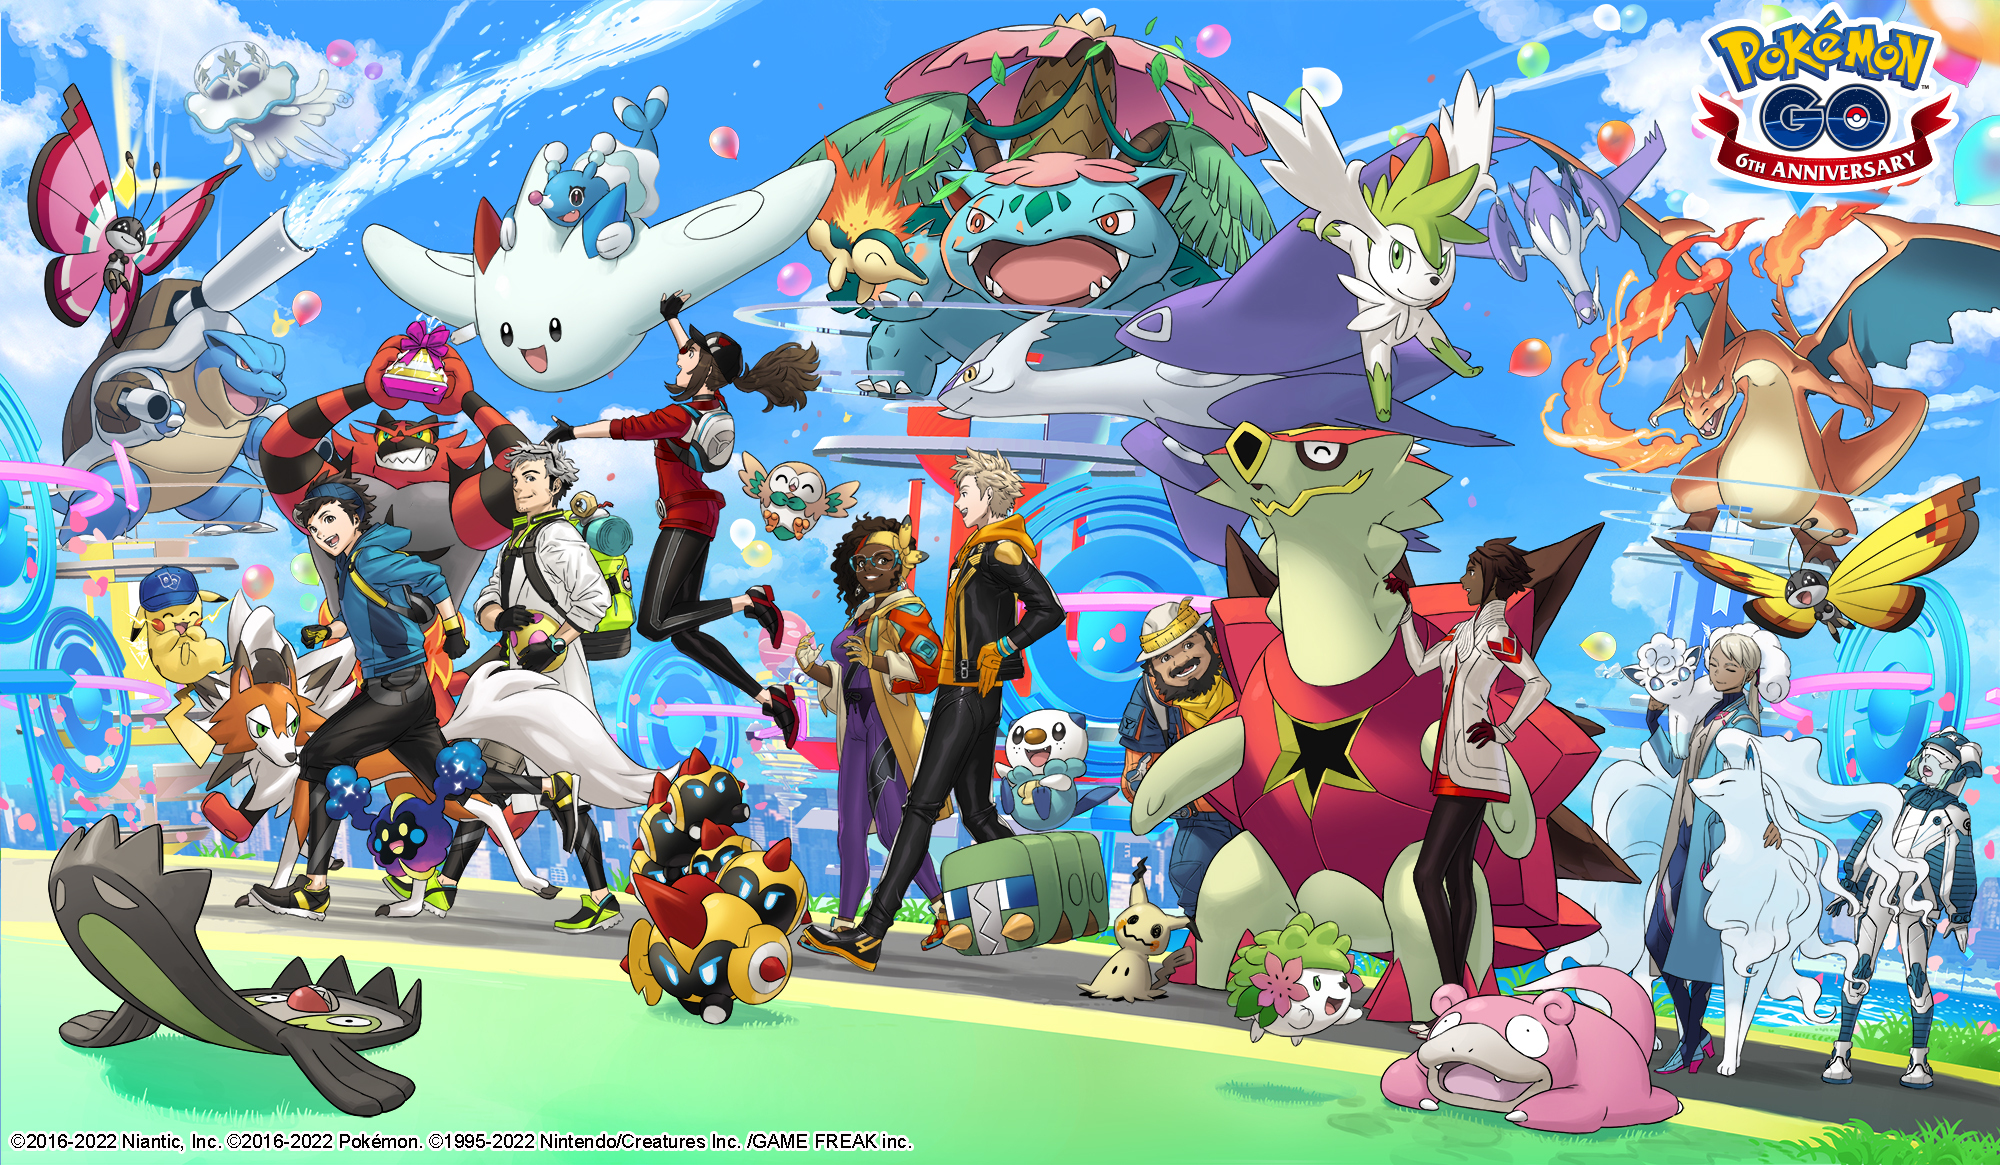 Happy 6th Anniversary, Pokémon GO!